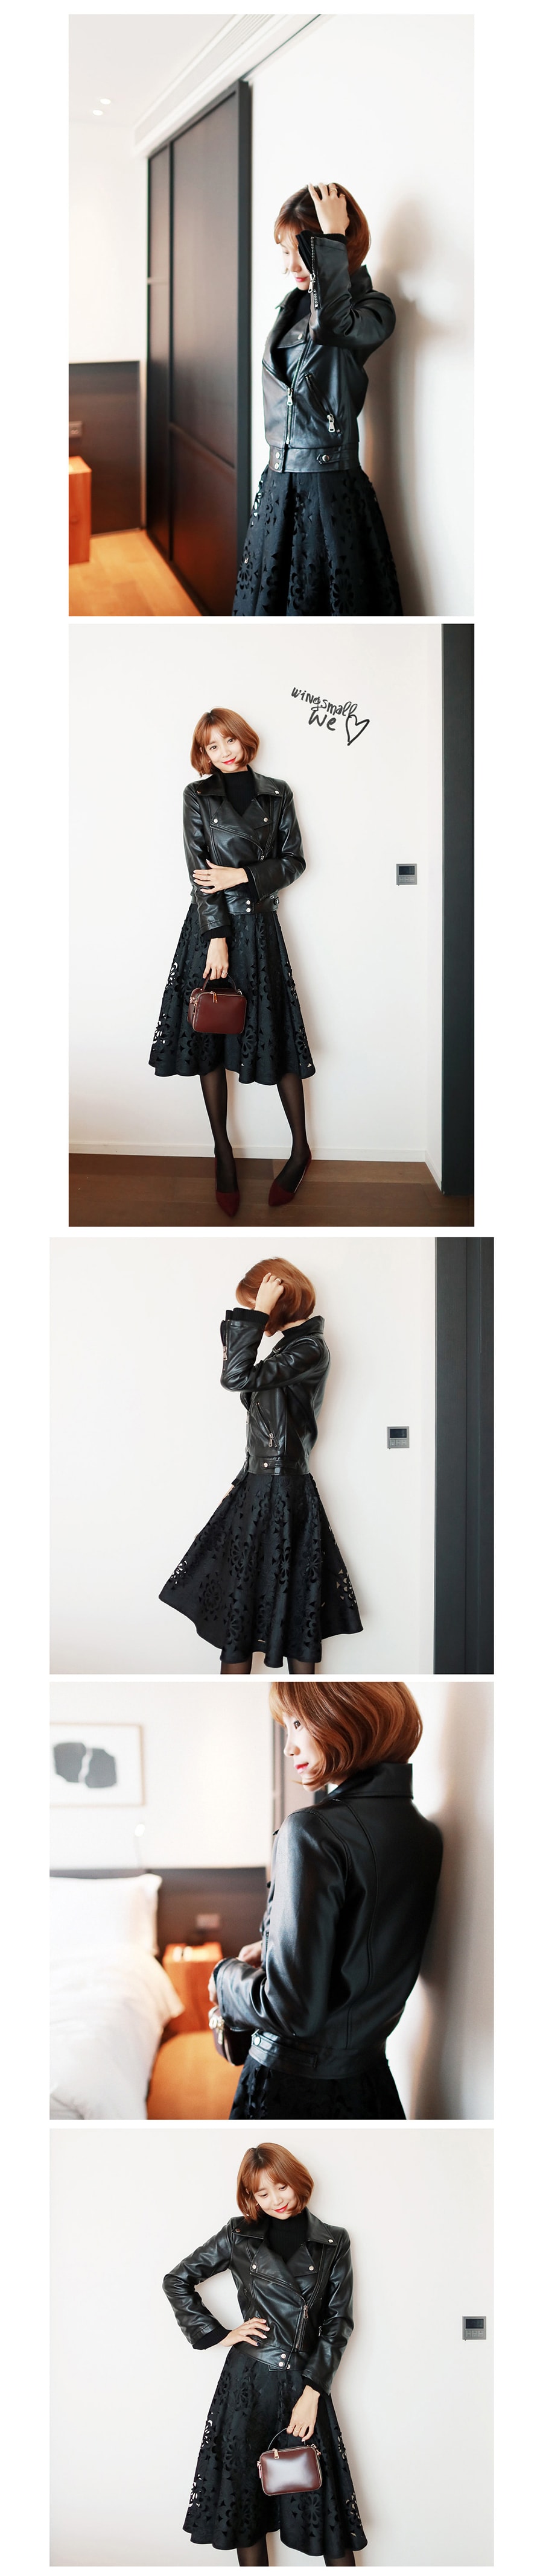 MAGZERO 【秋季新品】 镂空图案喇叭半身裙 #黑色 均码(S-M)